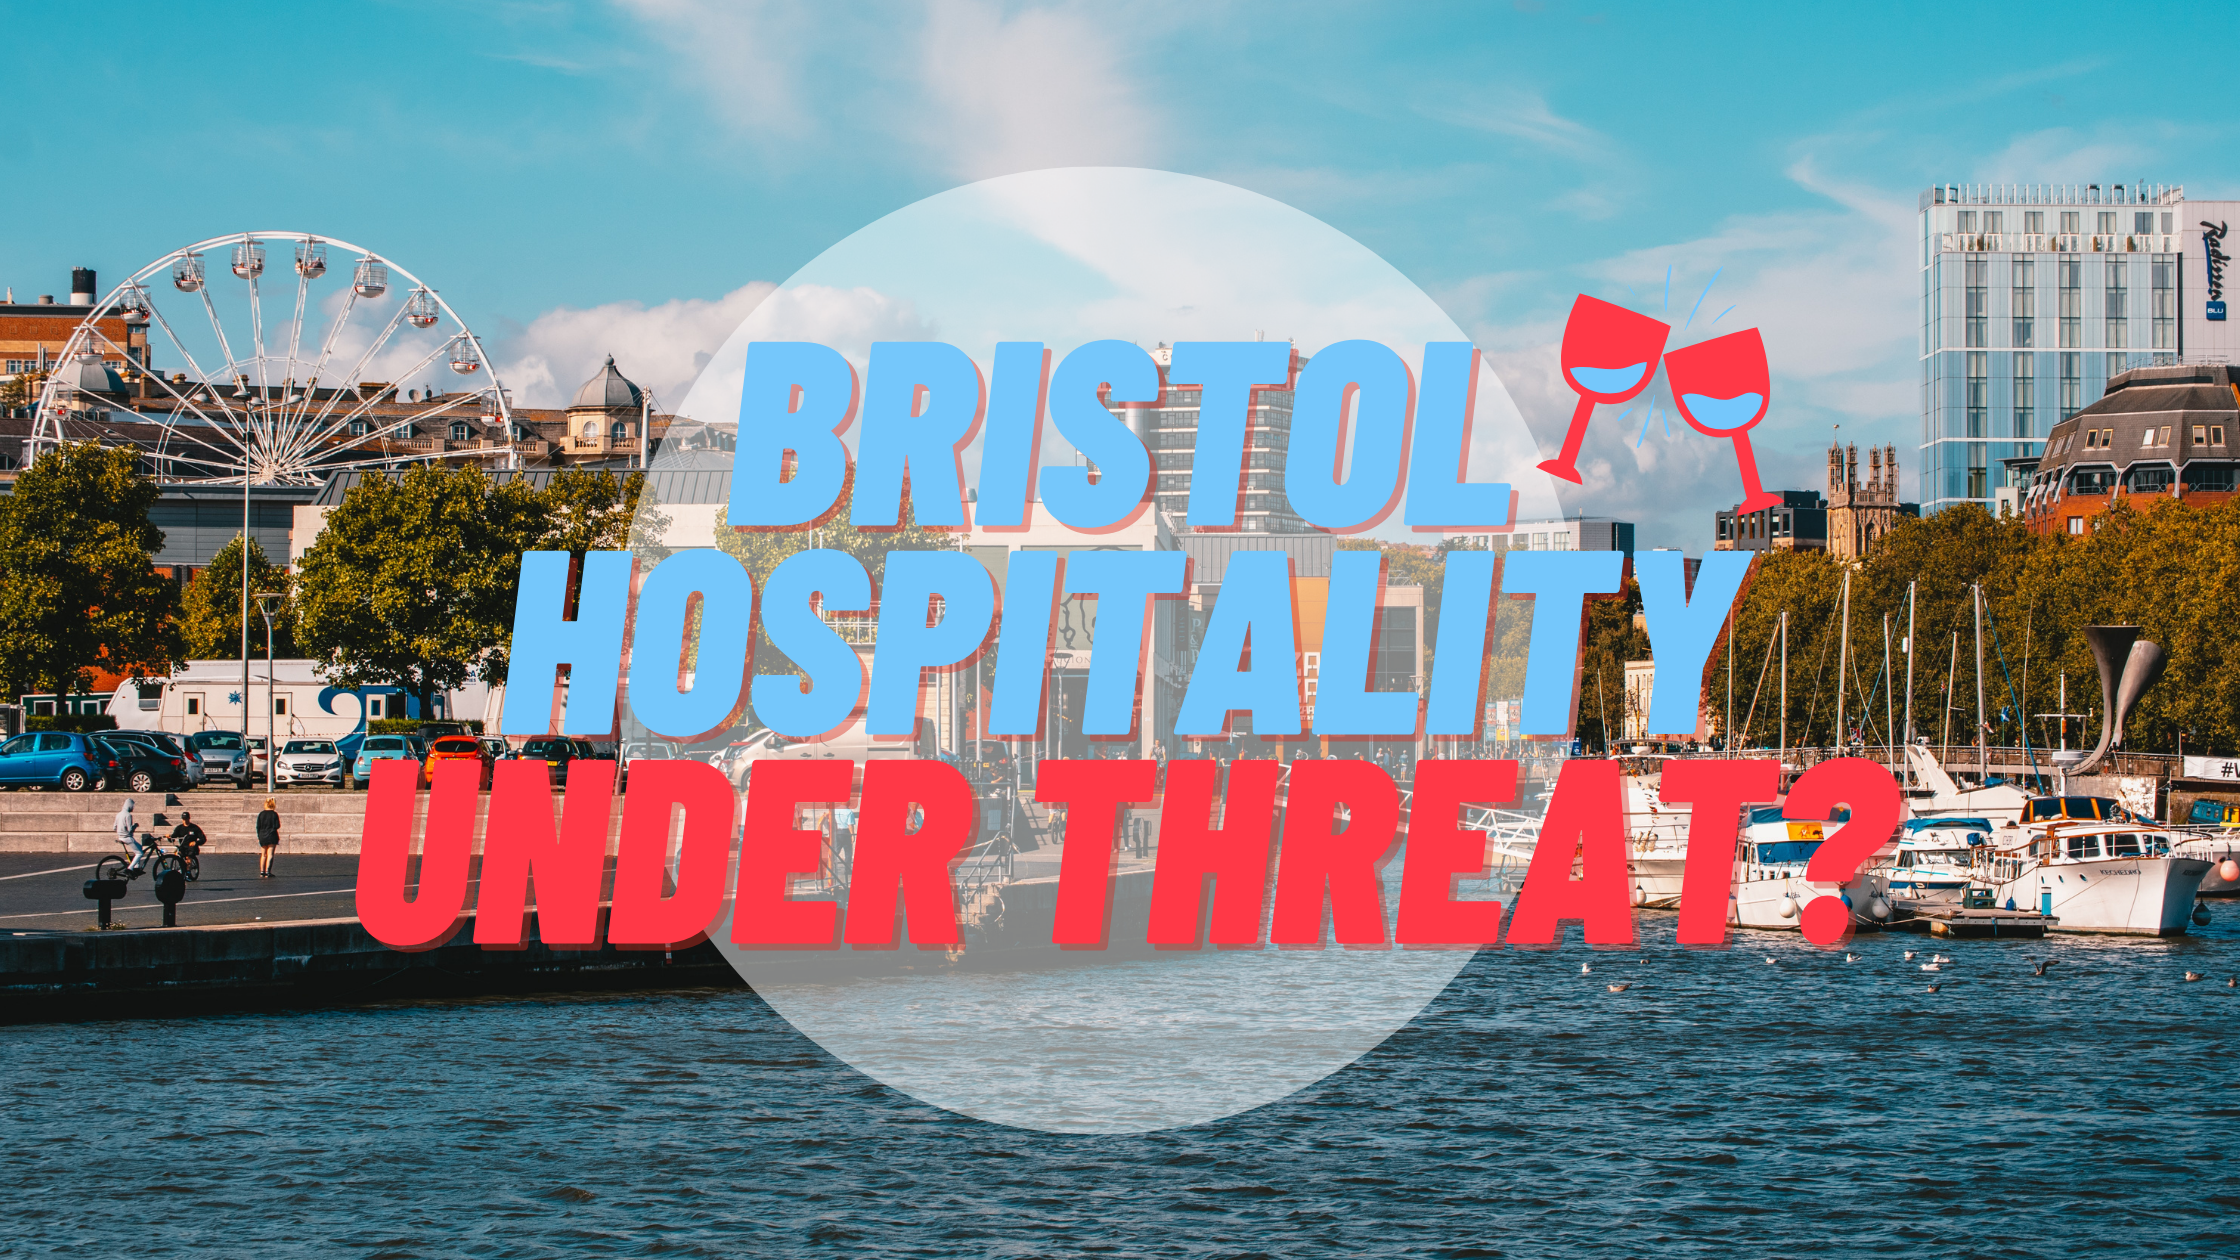 bristol-hospitality-banner